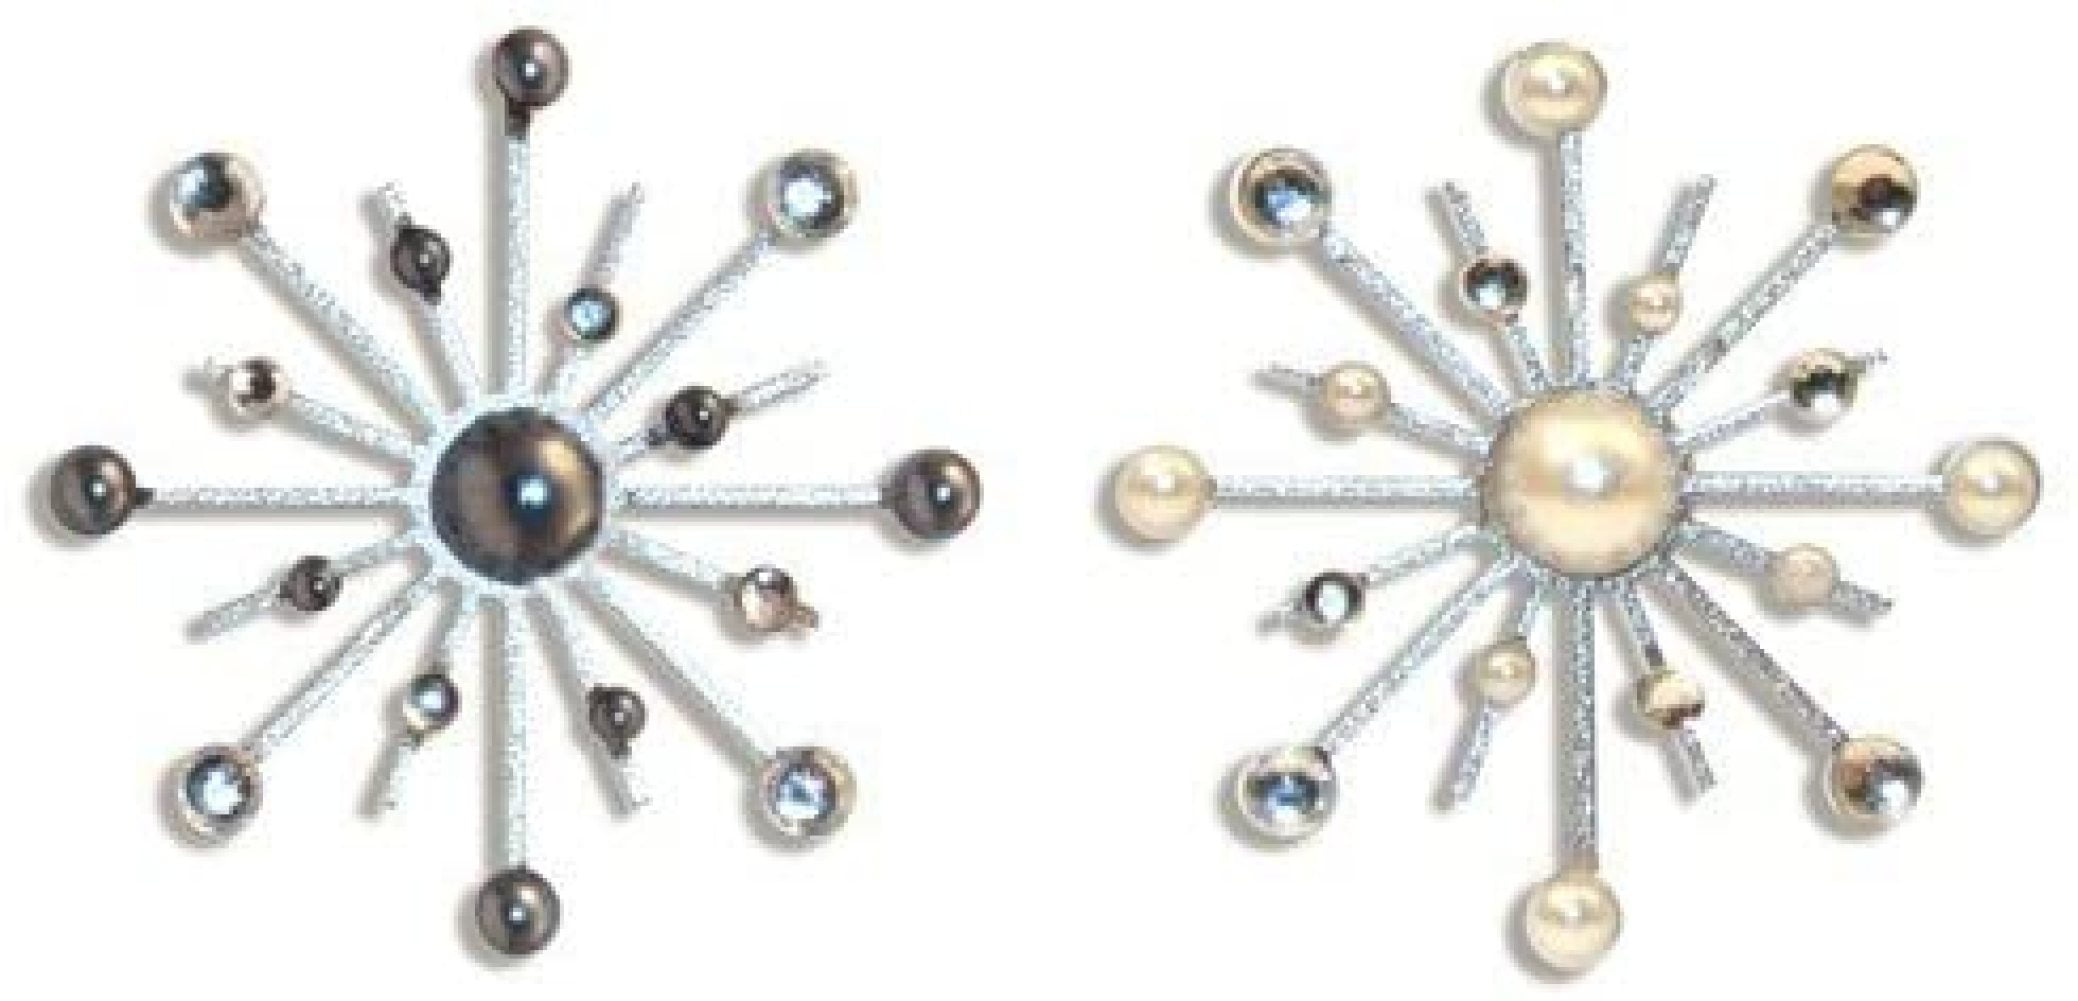 6 Mirrors and Jewels Karen Foster Design Sparkle Burst Brads Embellishments 